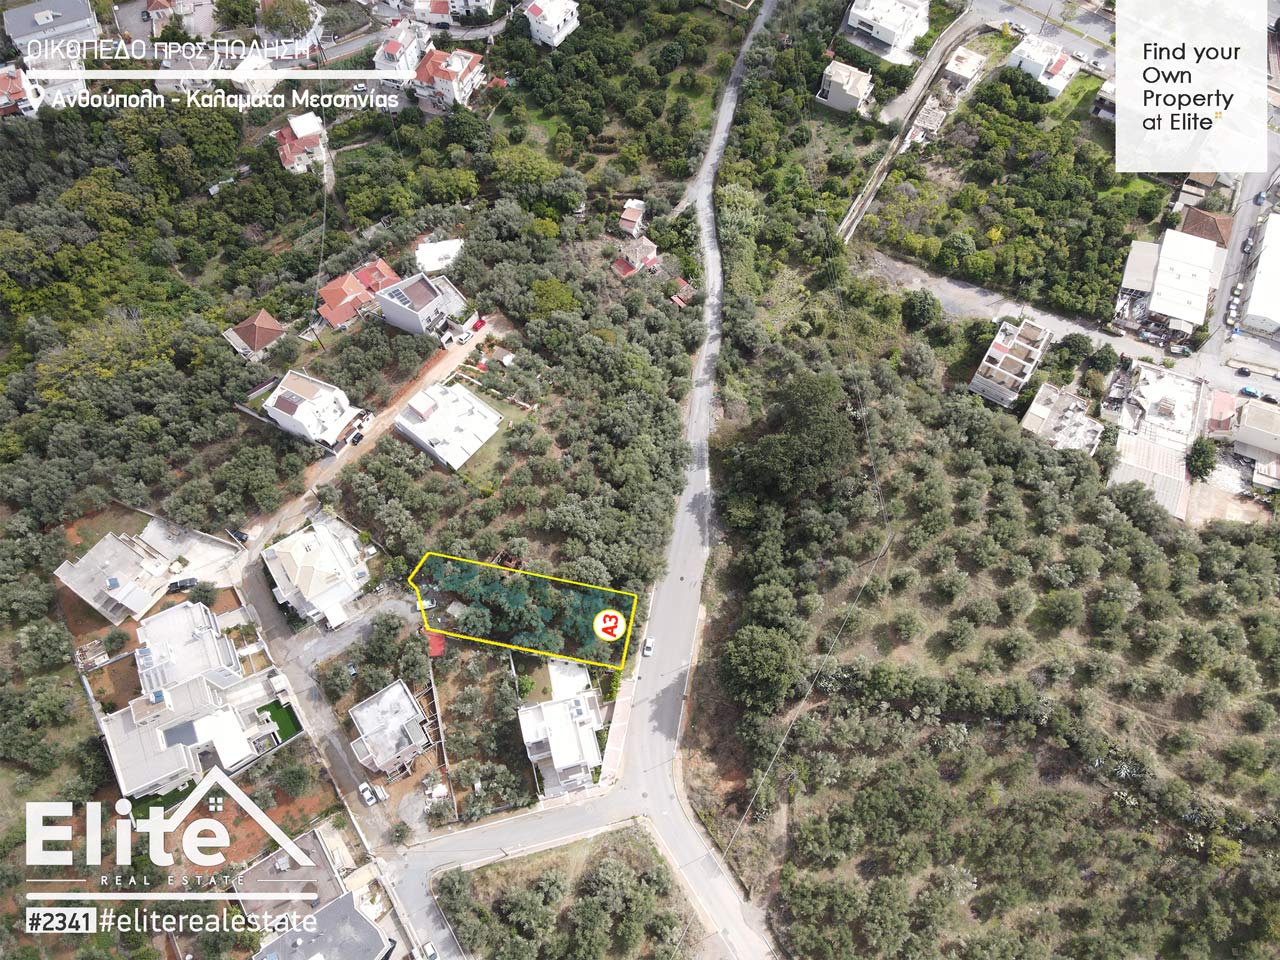 Sale land plot Kalamata (Anthoupoli) #2341 | ELITE REAL ESTATE